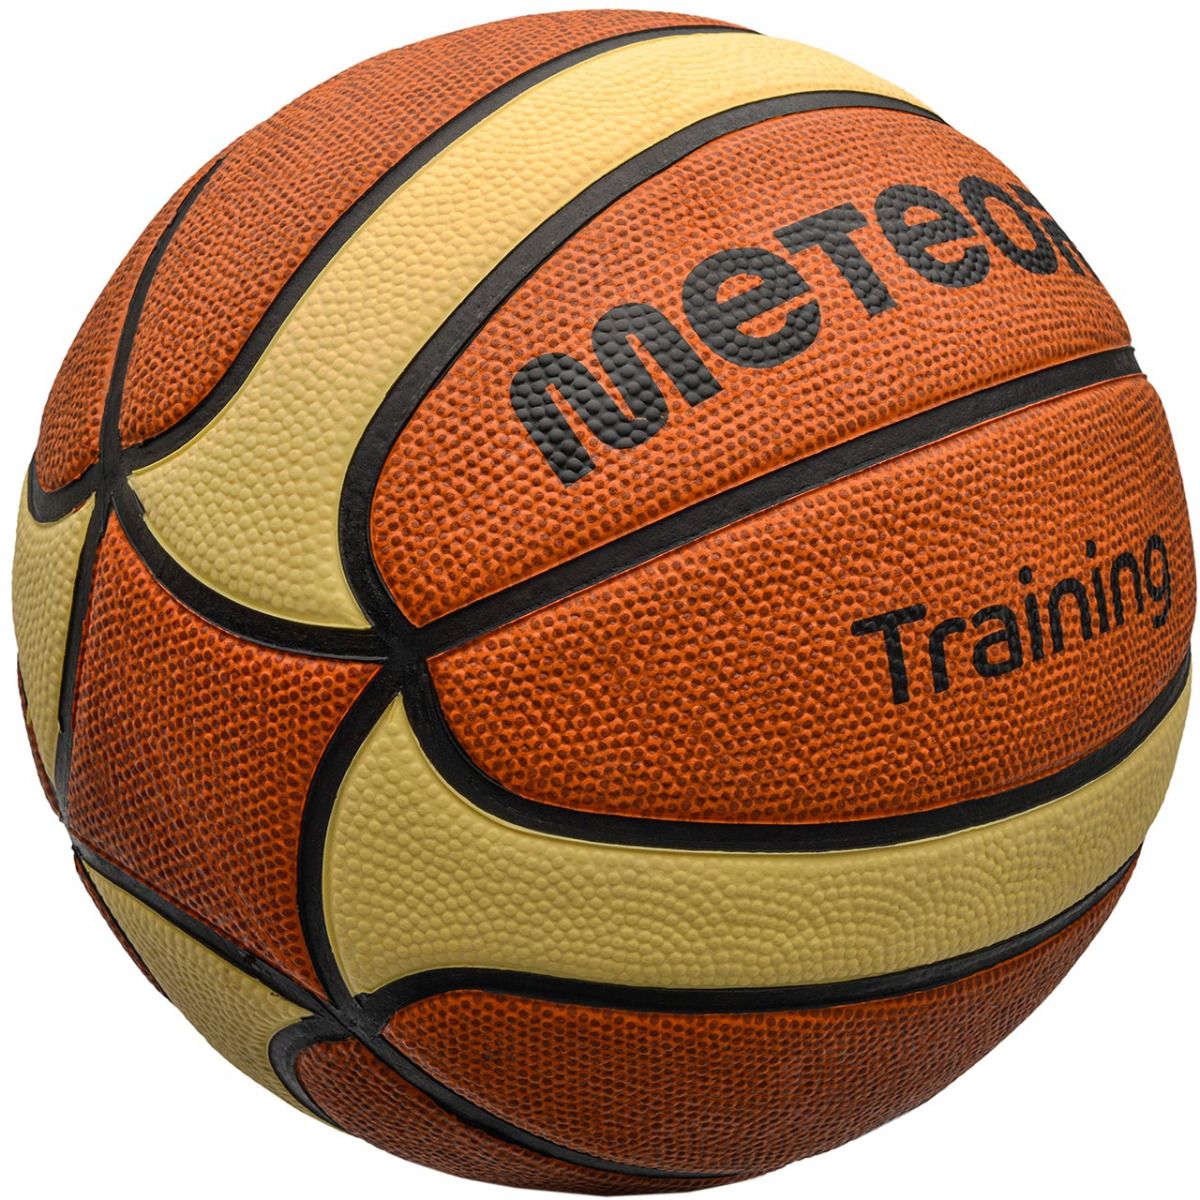 Meteor Basketball Cellular 7 10102